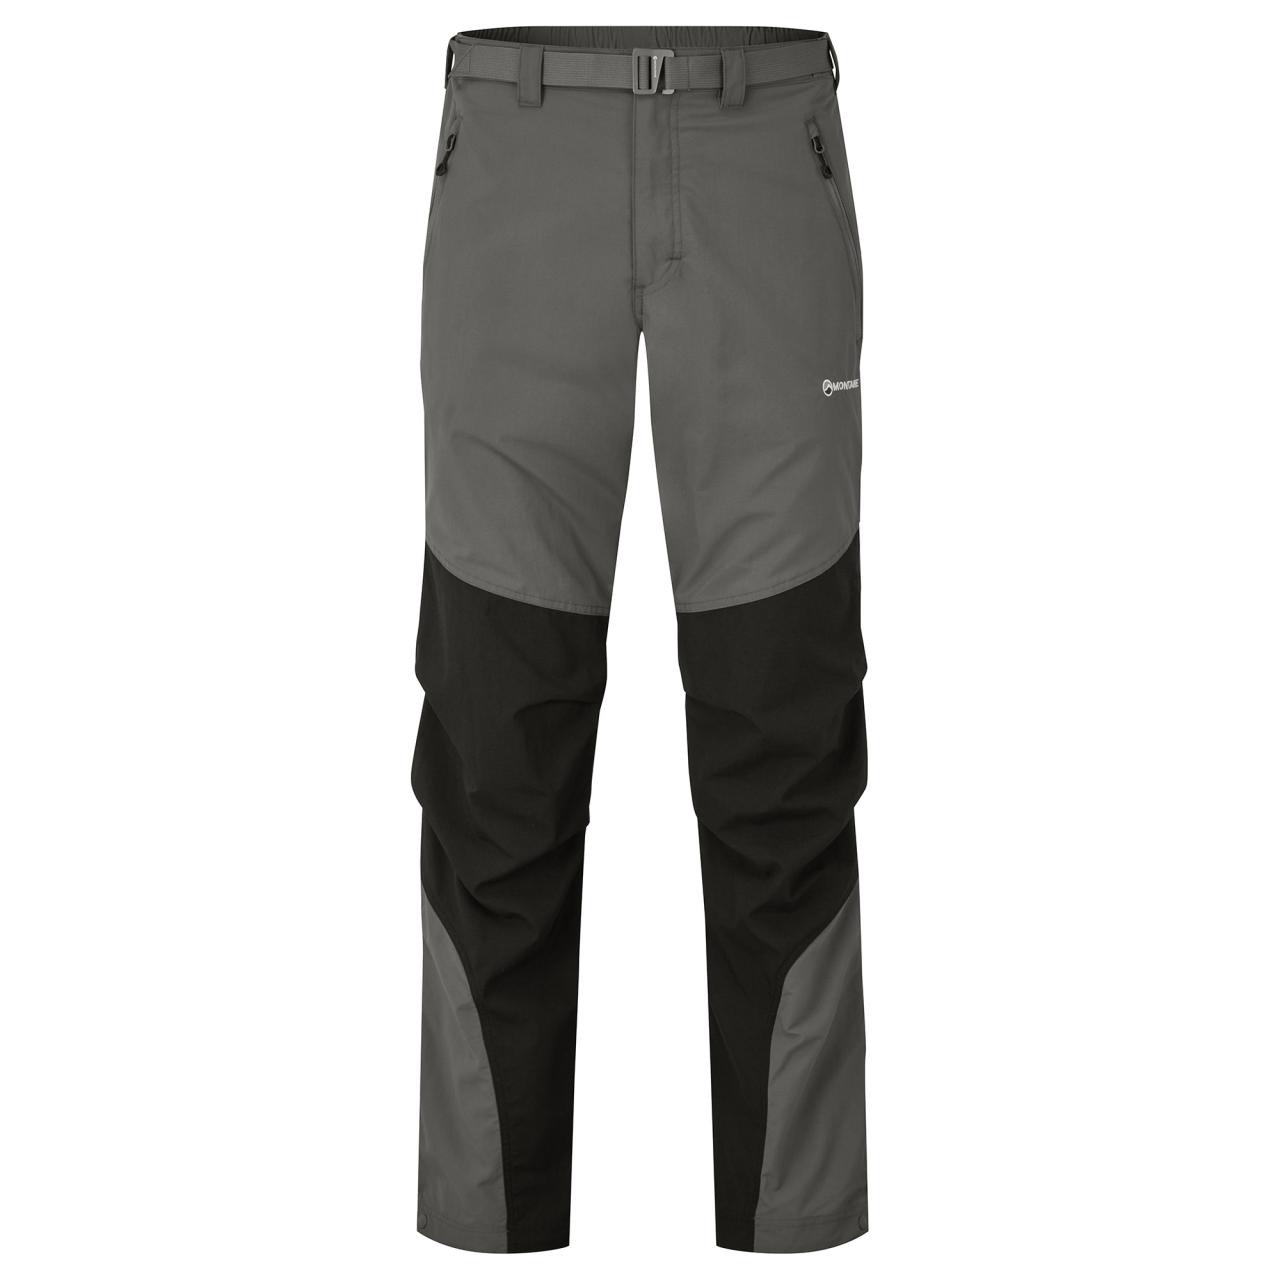 TERRA PANTS REG LEG-GRAPHITE-30/S pánské kalhoty šedé